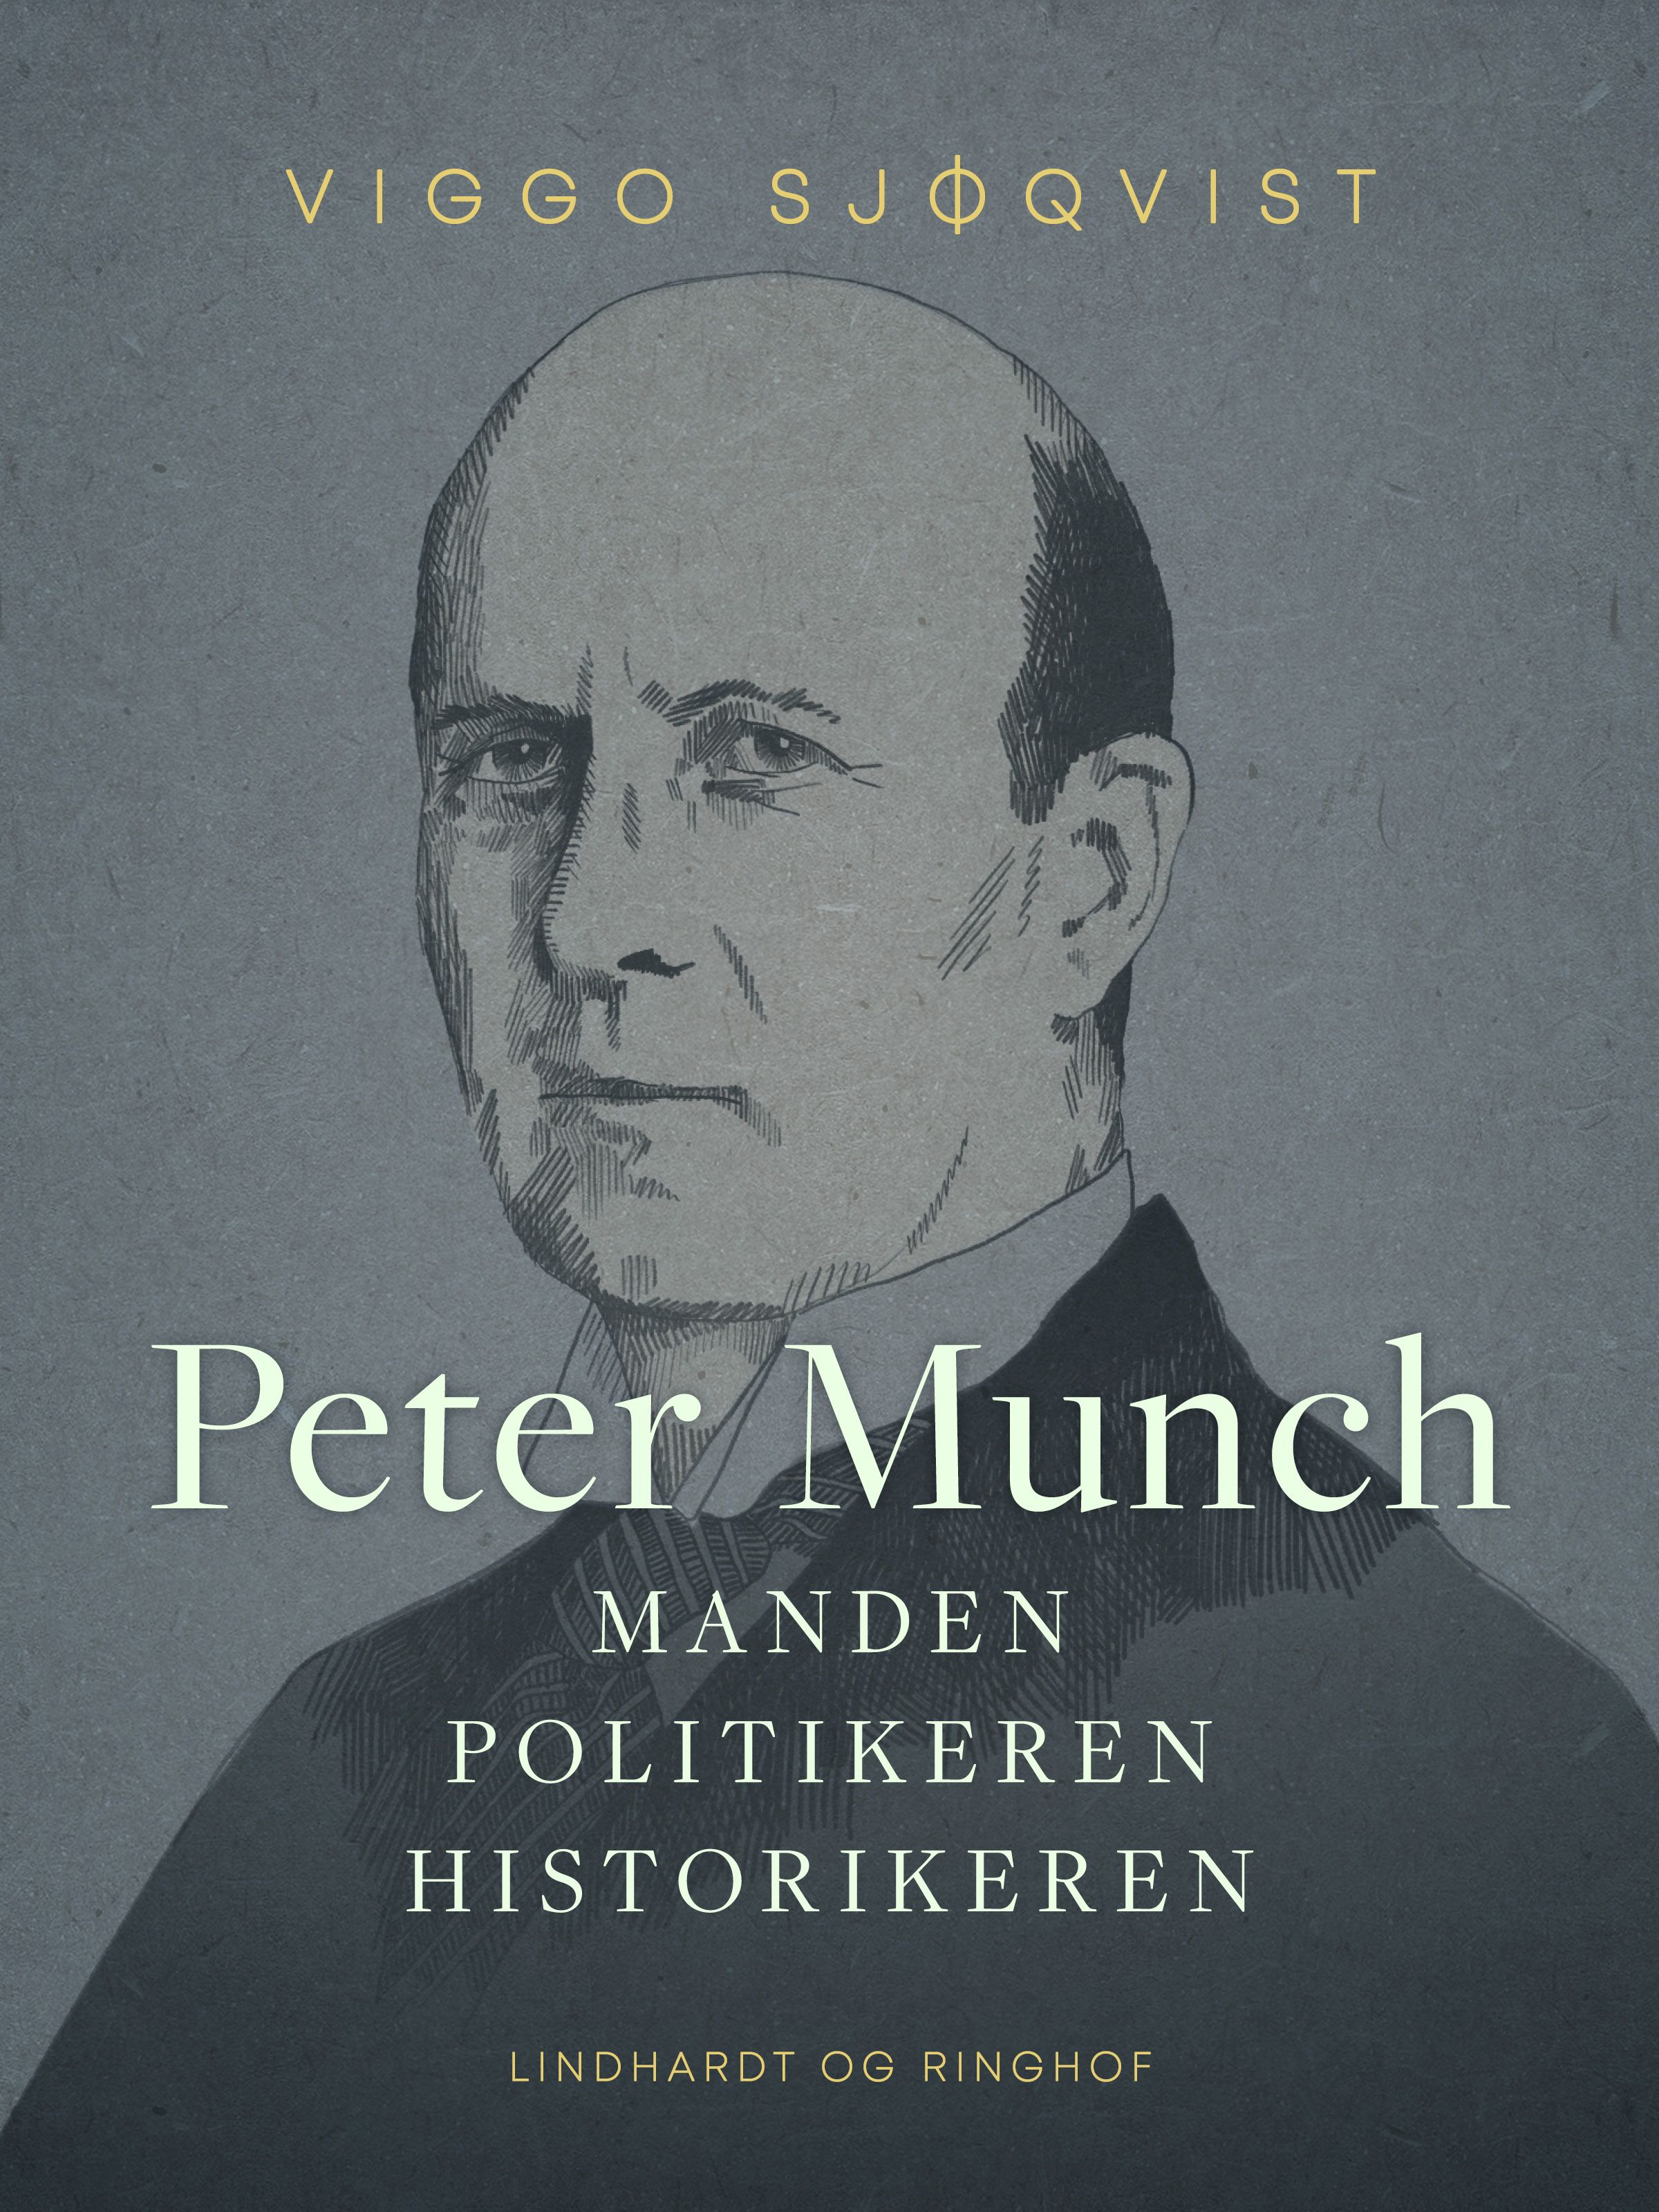 Peter Munch. Manden, politikeren, historikeren, e-bok av Viggo Sjøqvist